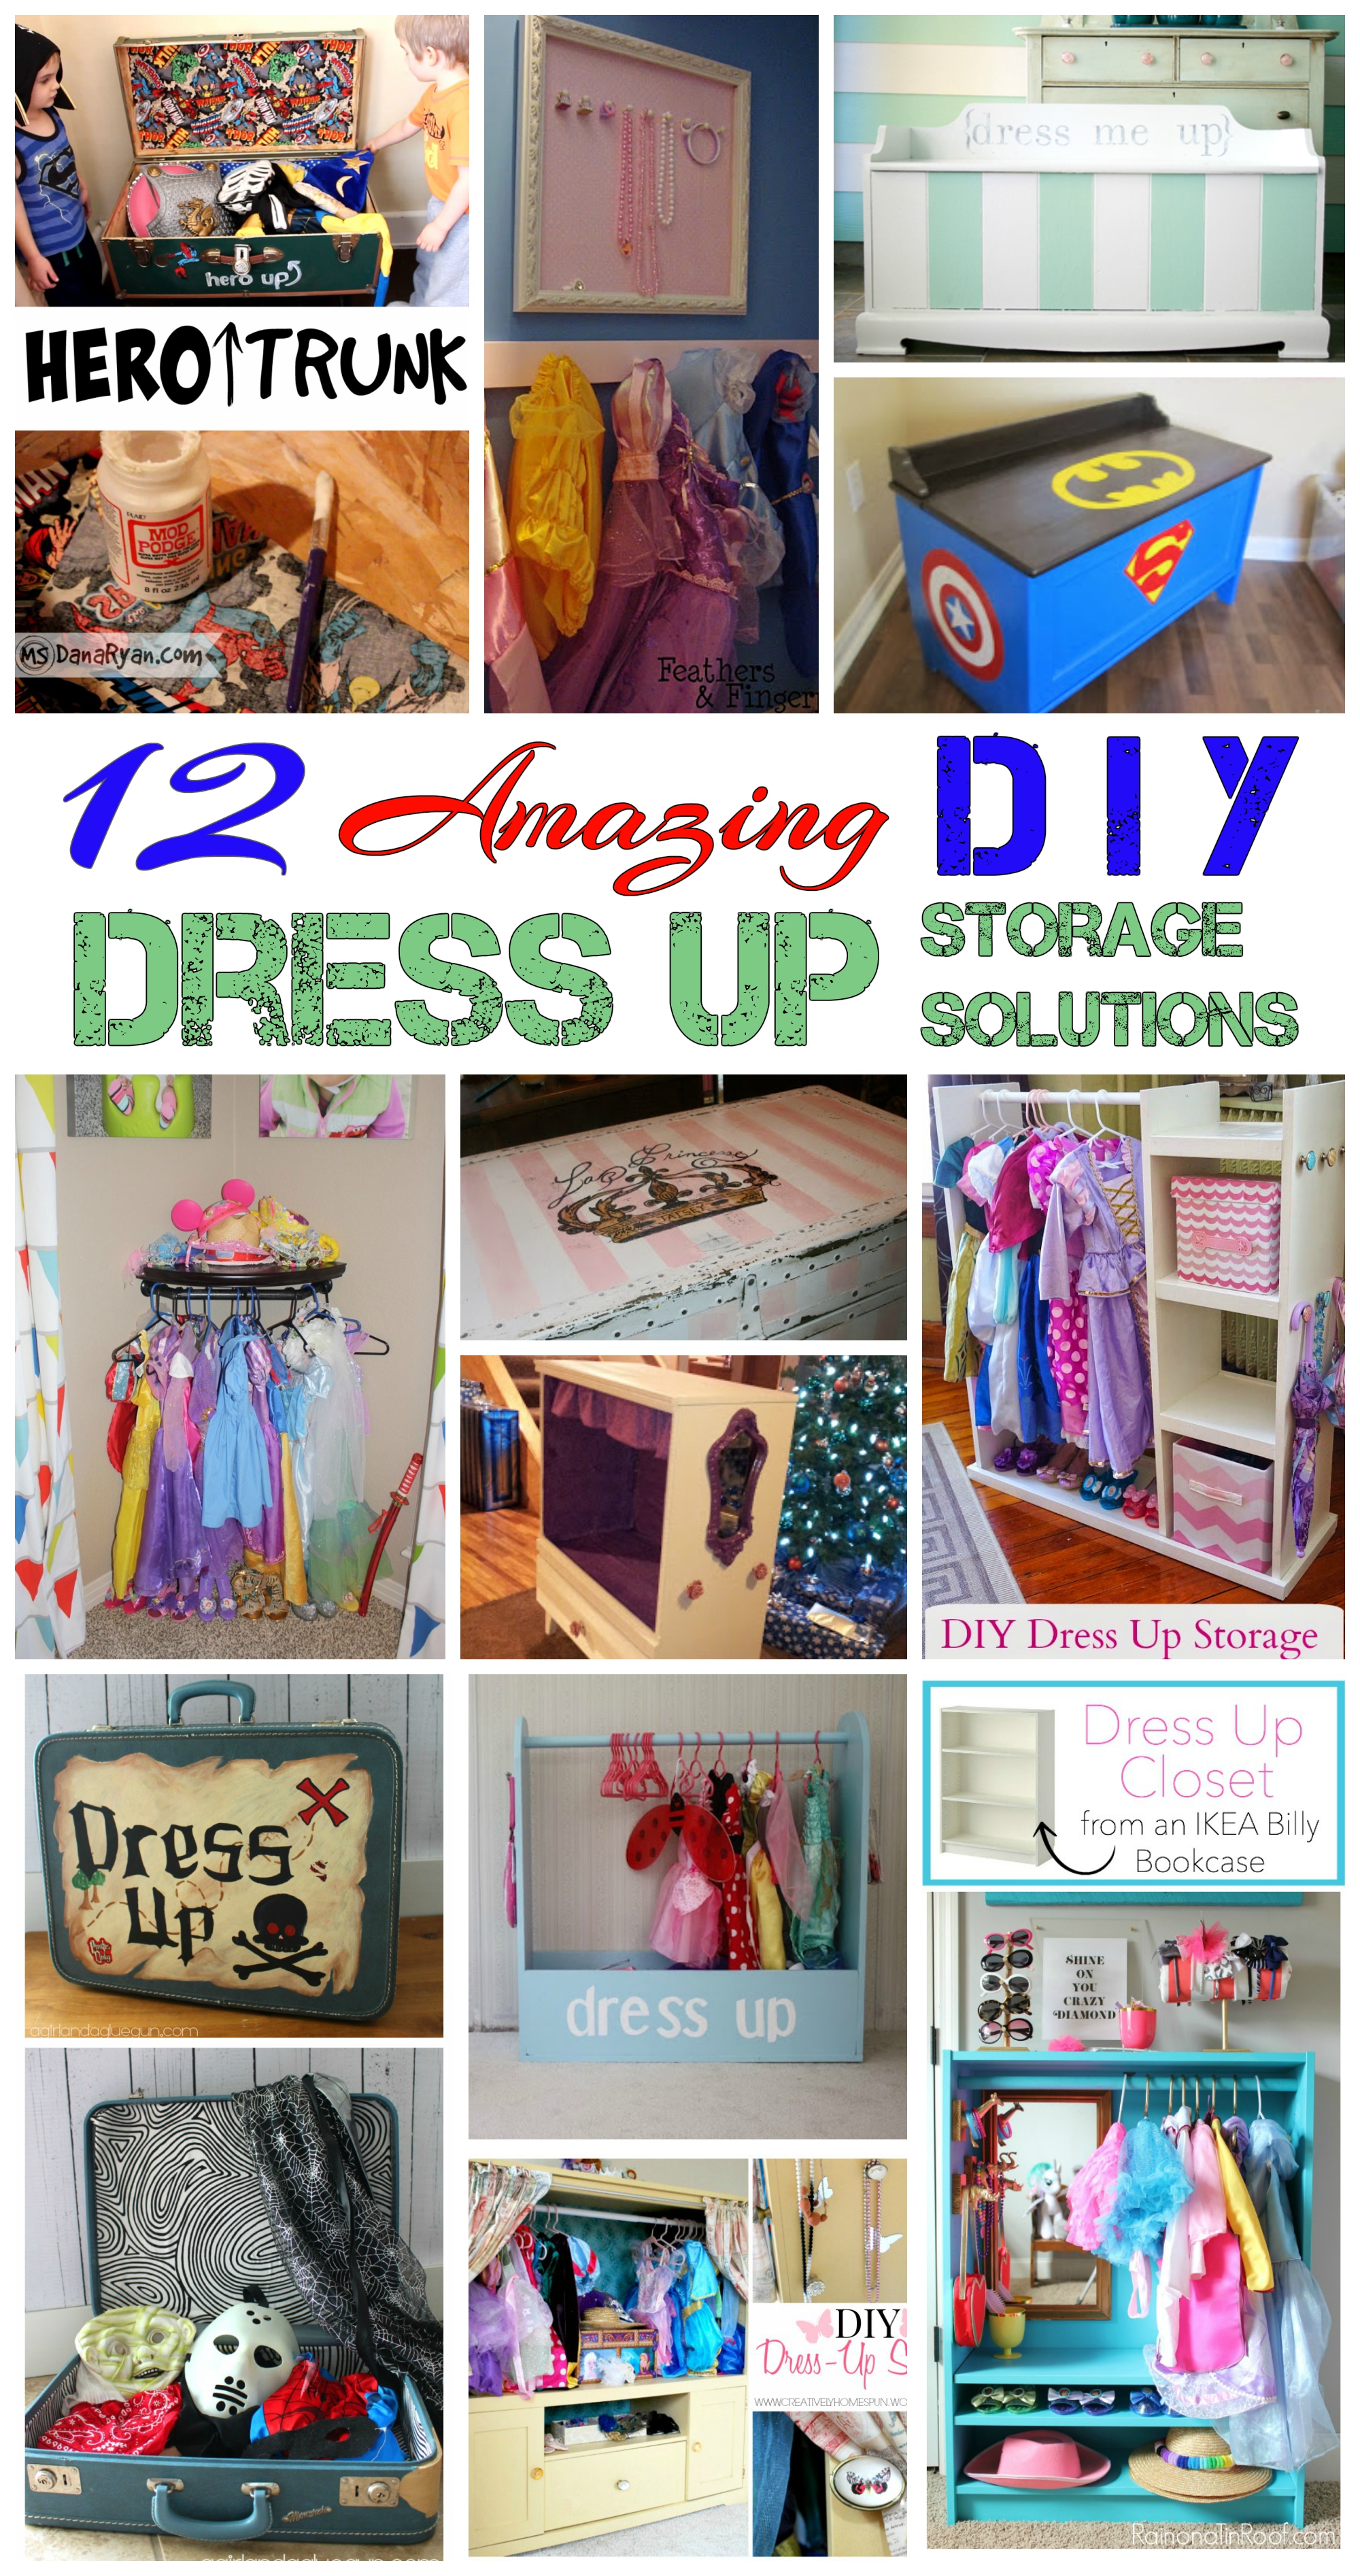 12 Amazing Dress Up Storage Solutions! Blog post at www.kidslovedressup.com